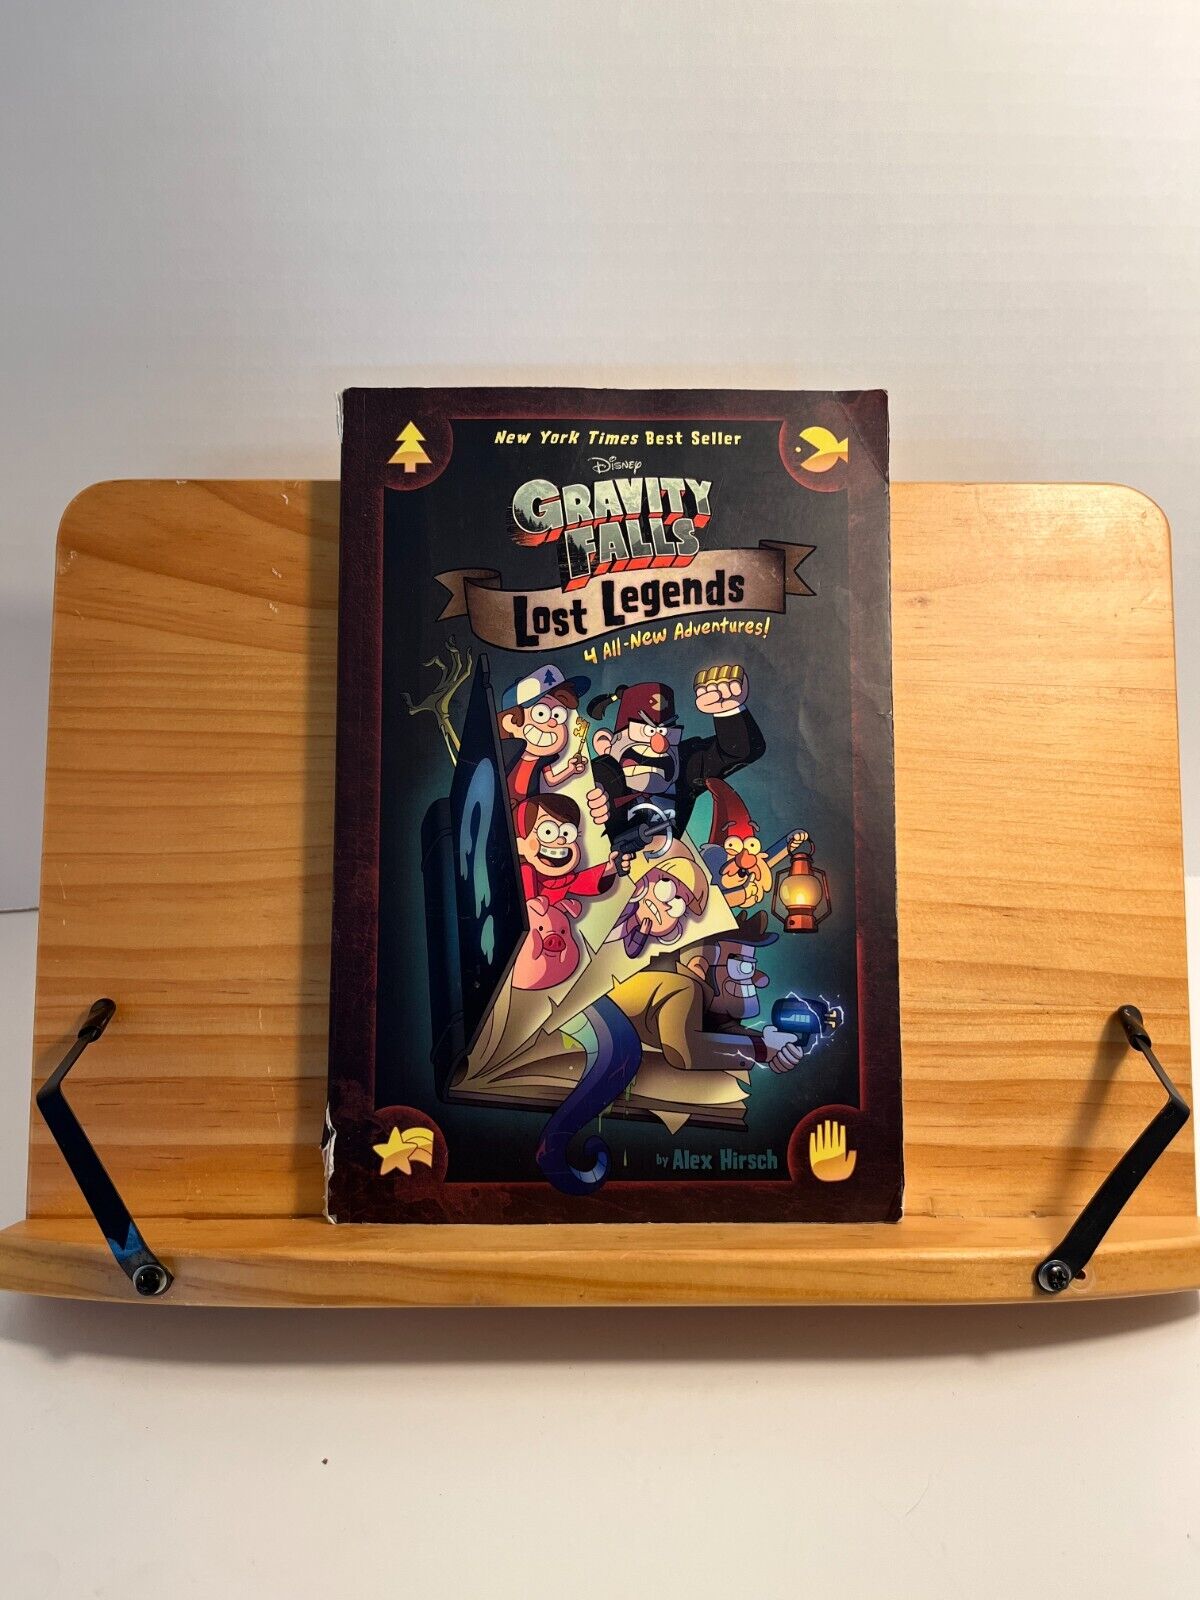 Gravity Falls Lost Legends 4 New Adventures Graphic Novel